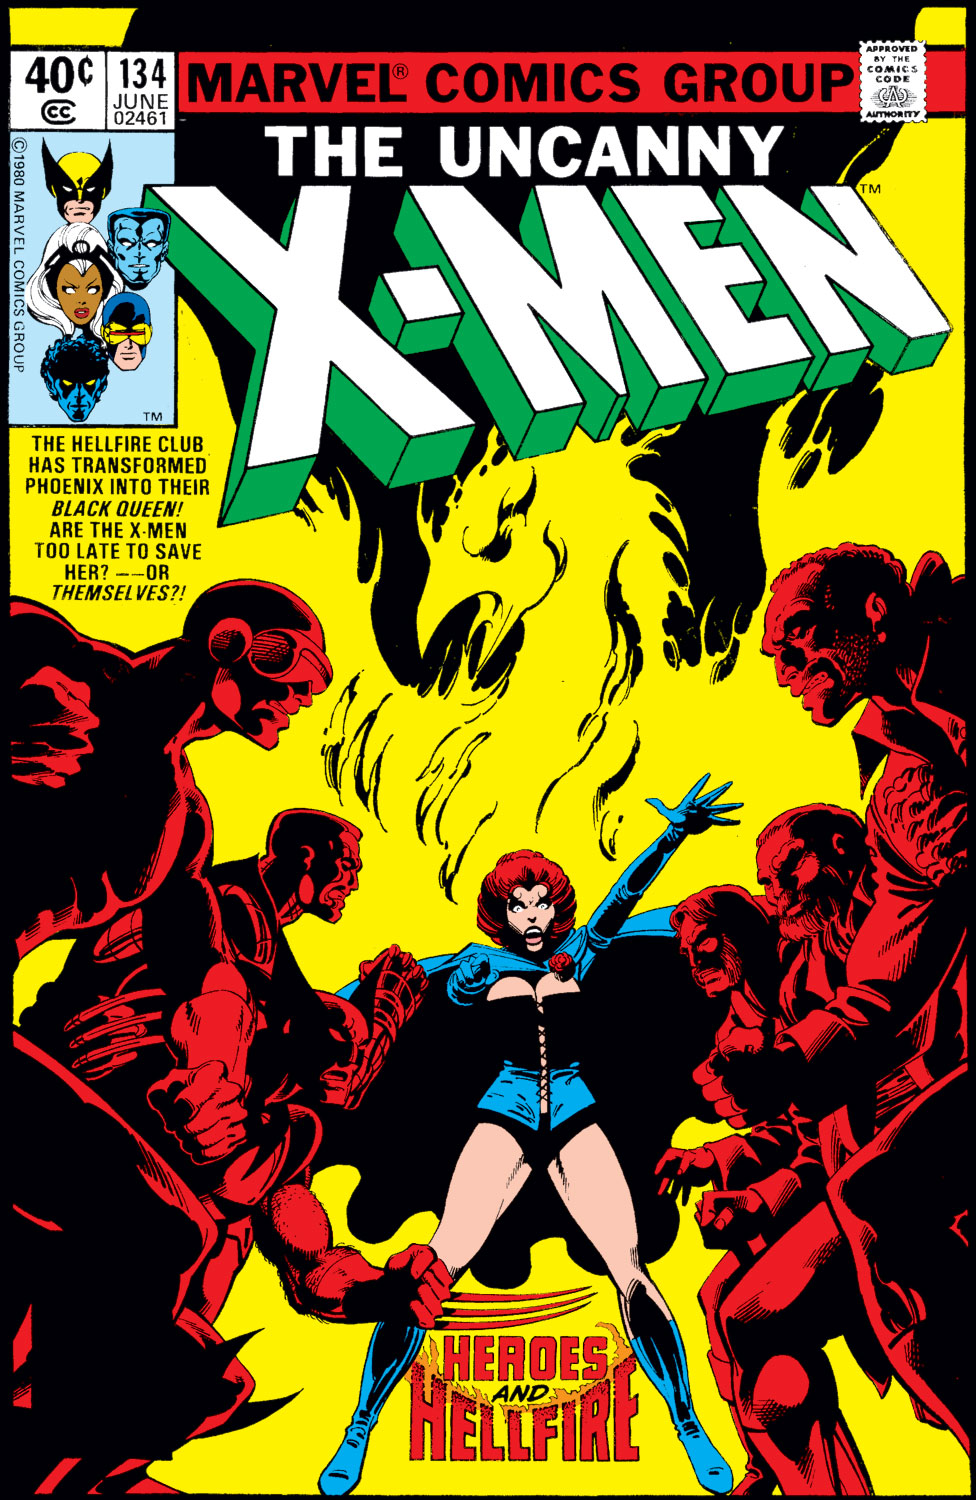 THE UNCANNY XMEN key issues 1990s 1980s Marvel 